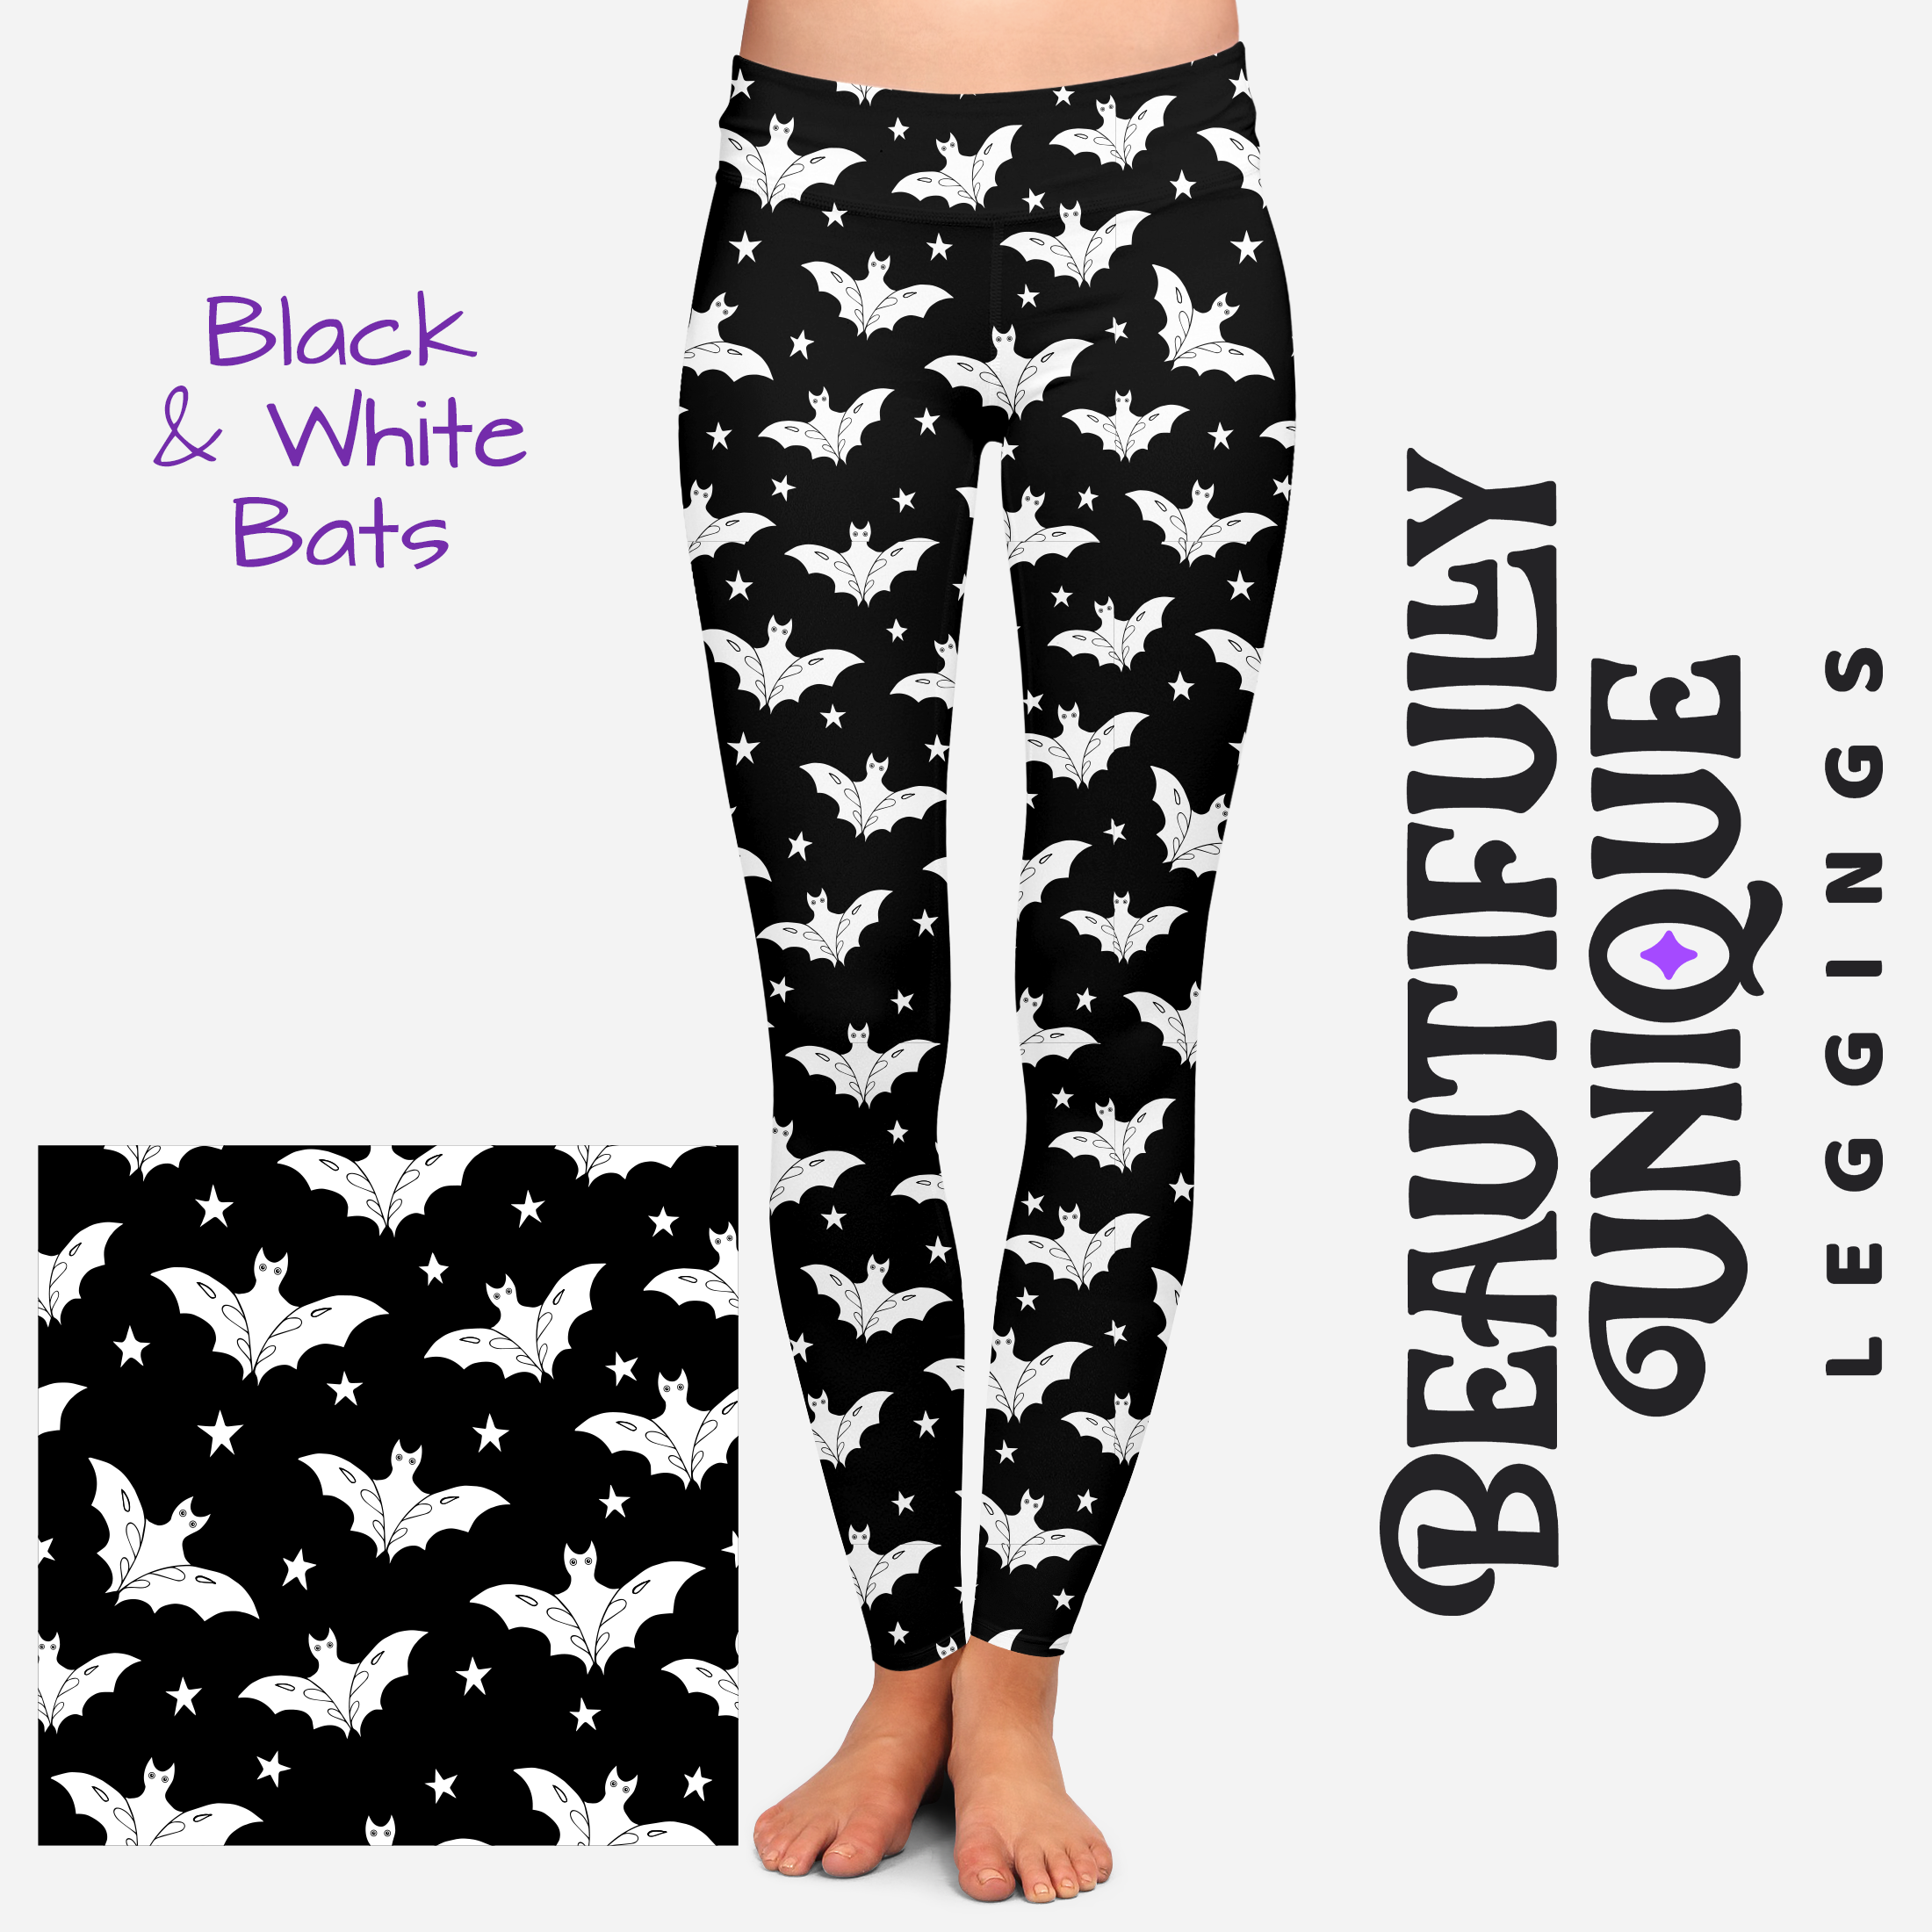 Black & White Bats - High-quality Handcrafted Vibrant Leggings